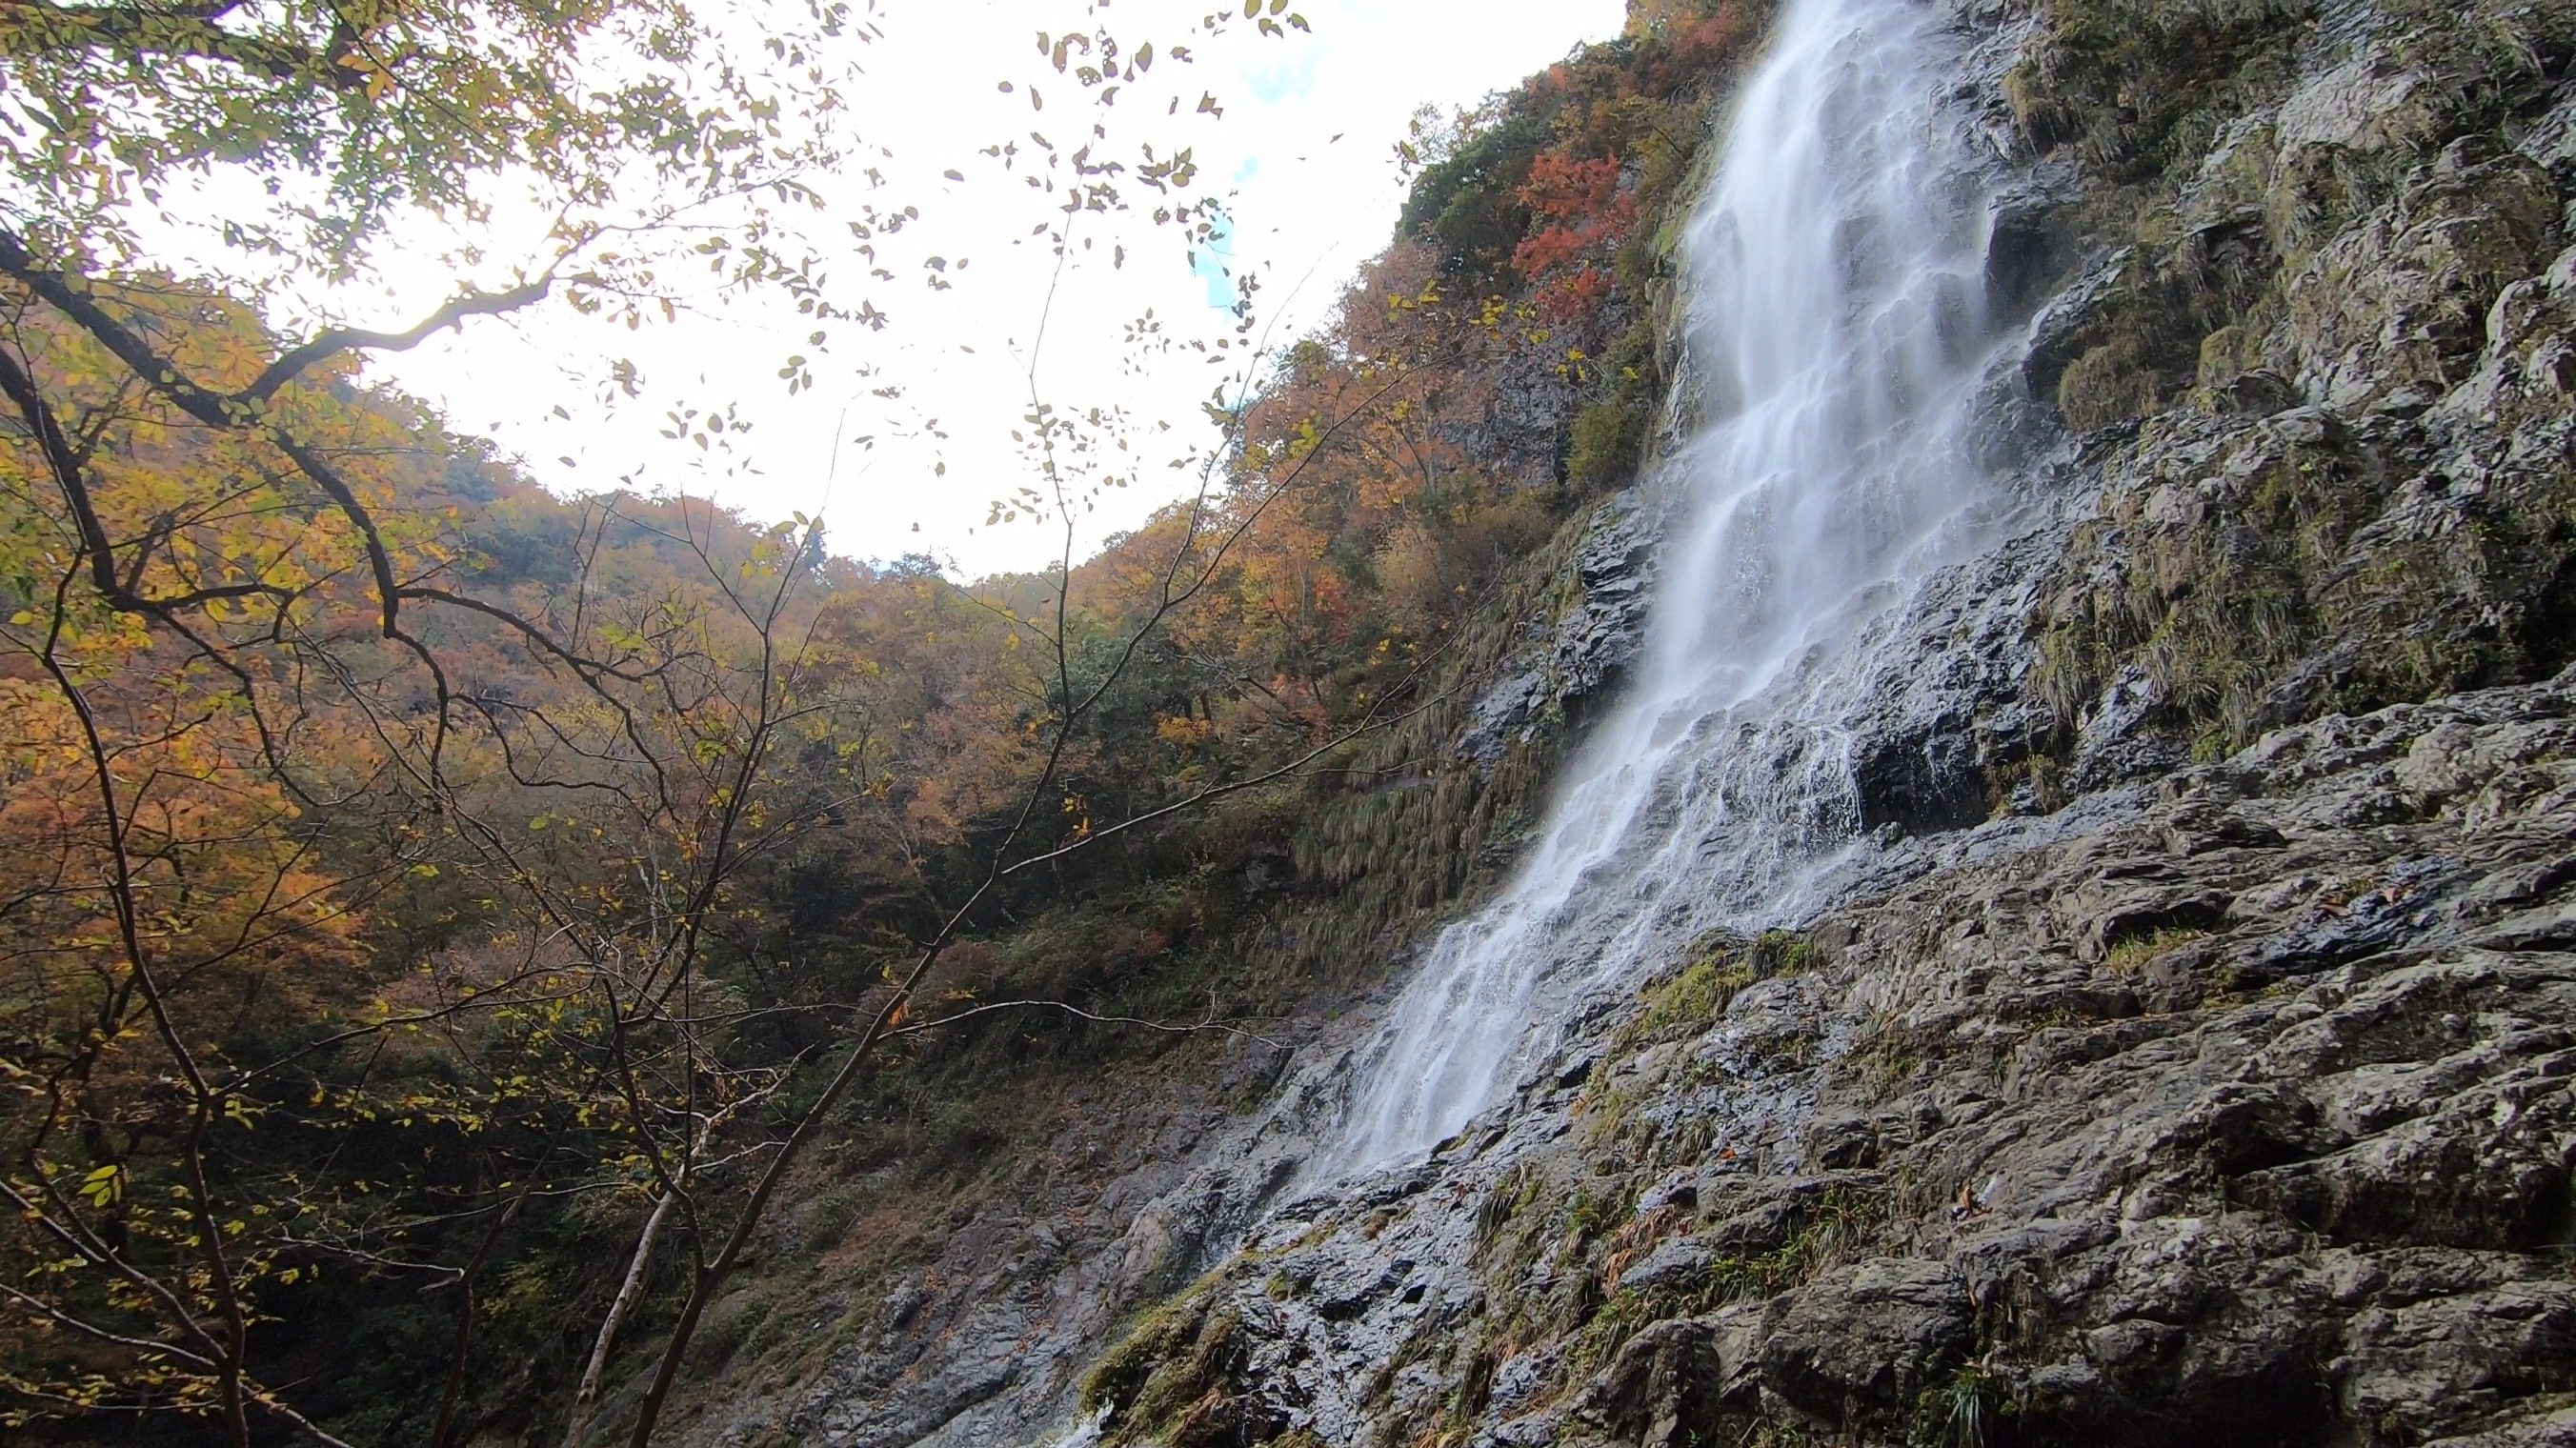 GH011935 兵庫県  天滝 (兵庫県一の落差を誇る紅葉景色の美しい絶景の滝 !撮影した写真の紹介、 アクセス情報や撮影ポイントなど!)　